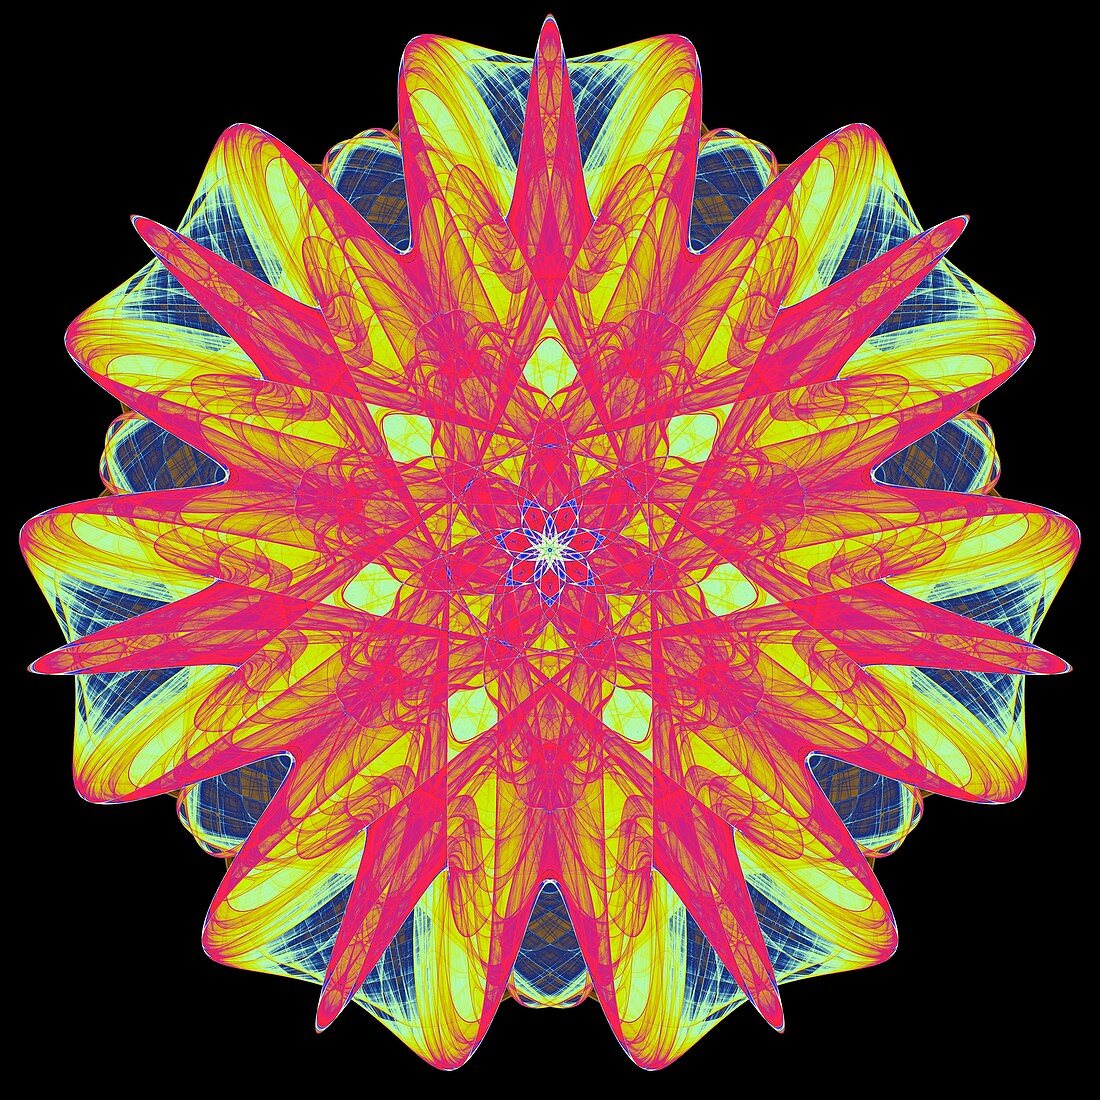 Abstract fractal illustration